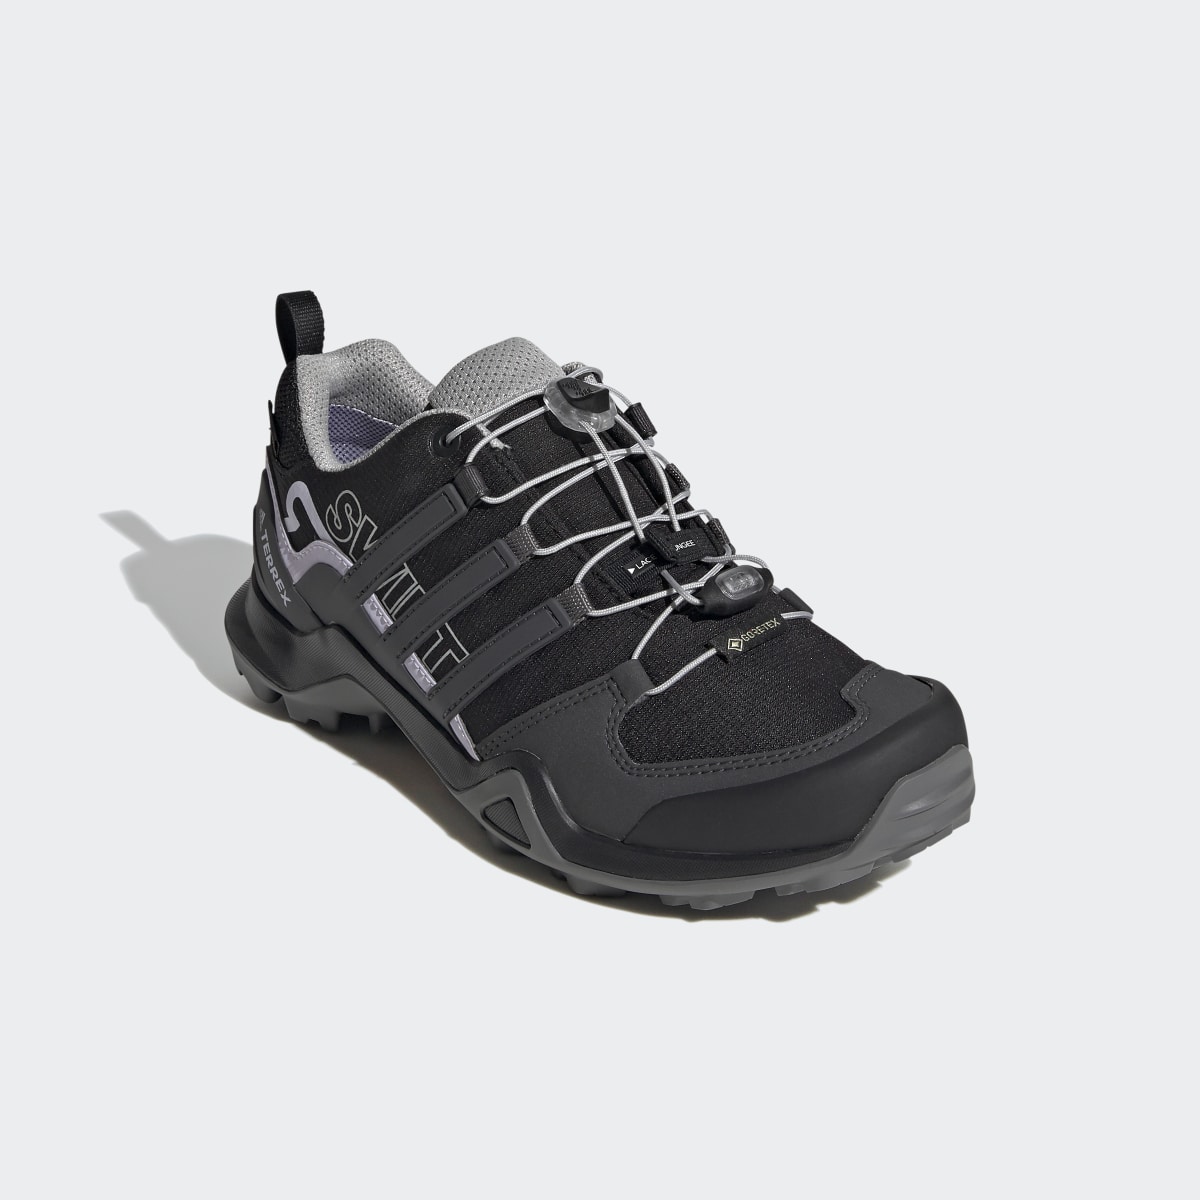 Adidas Terrex Swift R2 GORE-TEX Hiking Shoes. 6